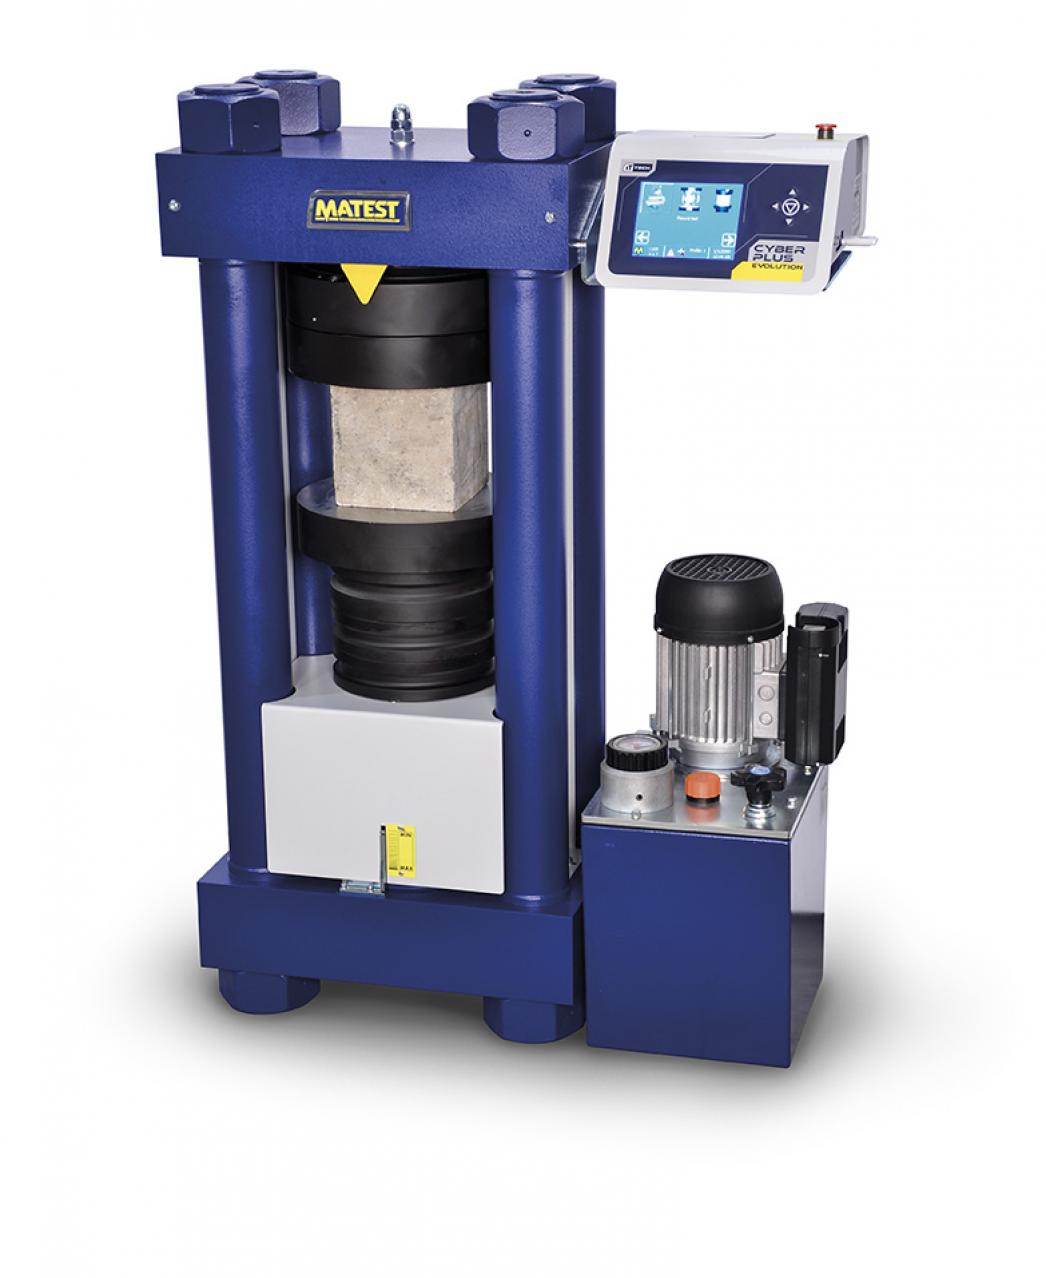 Concrete compression machine 2000 kN automatic, Autotec